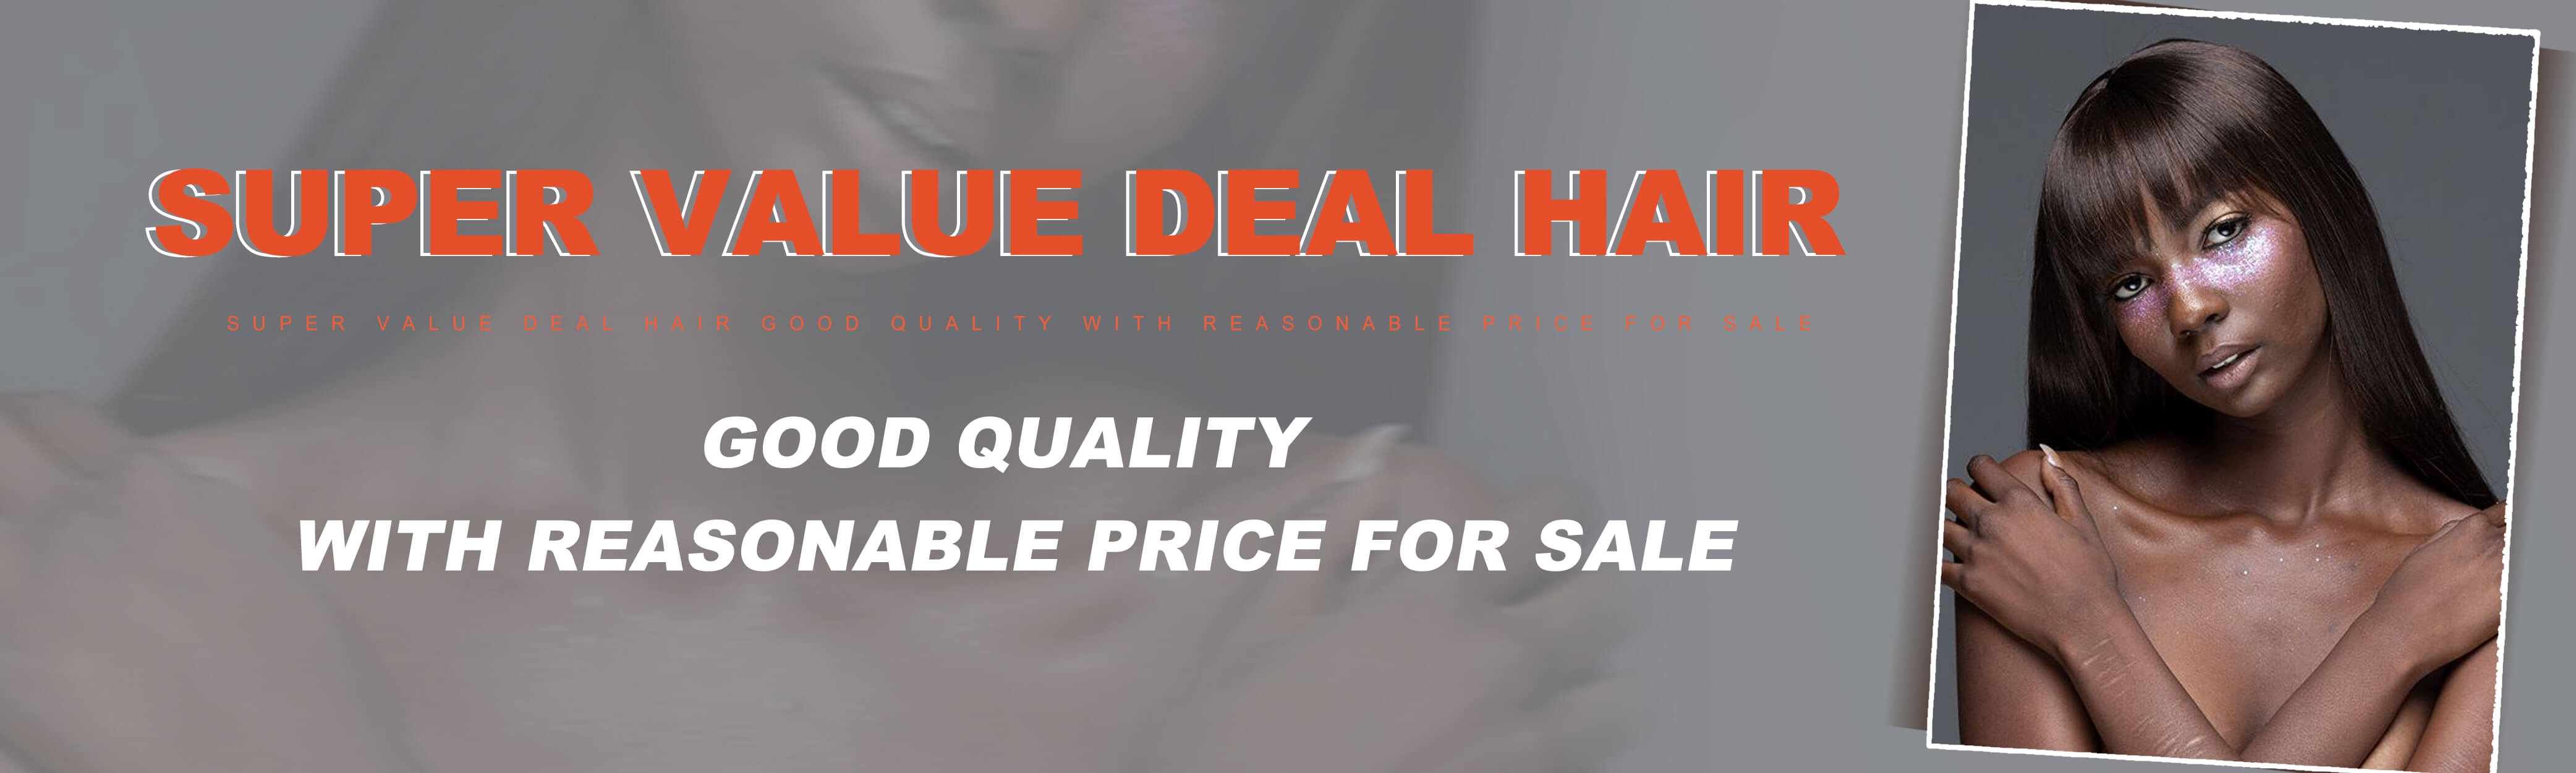 Super Value Deal